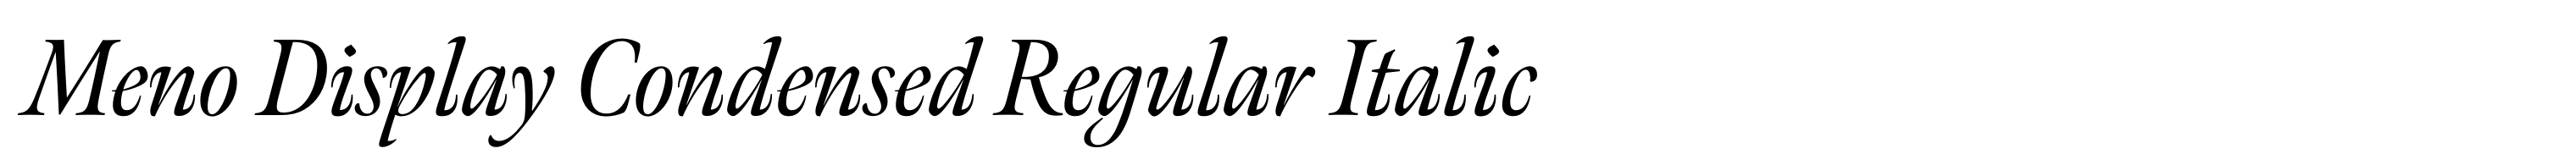 Meno Display Condensed Regular Italic